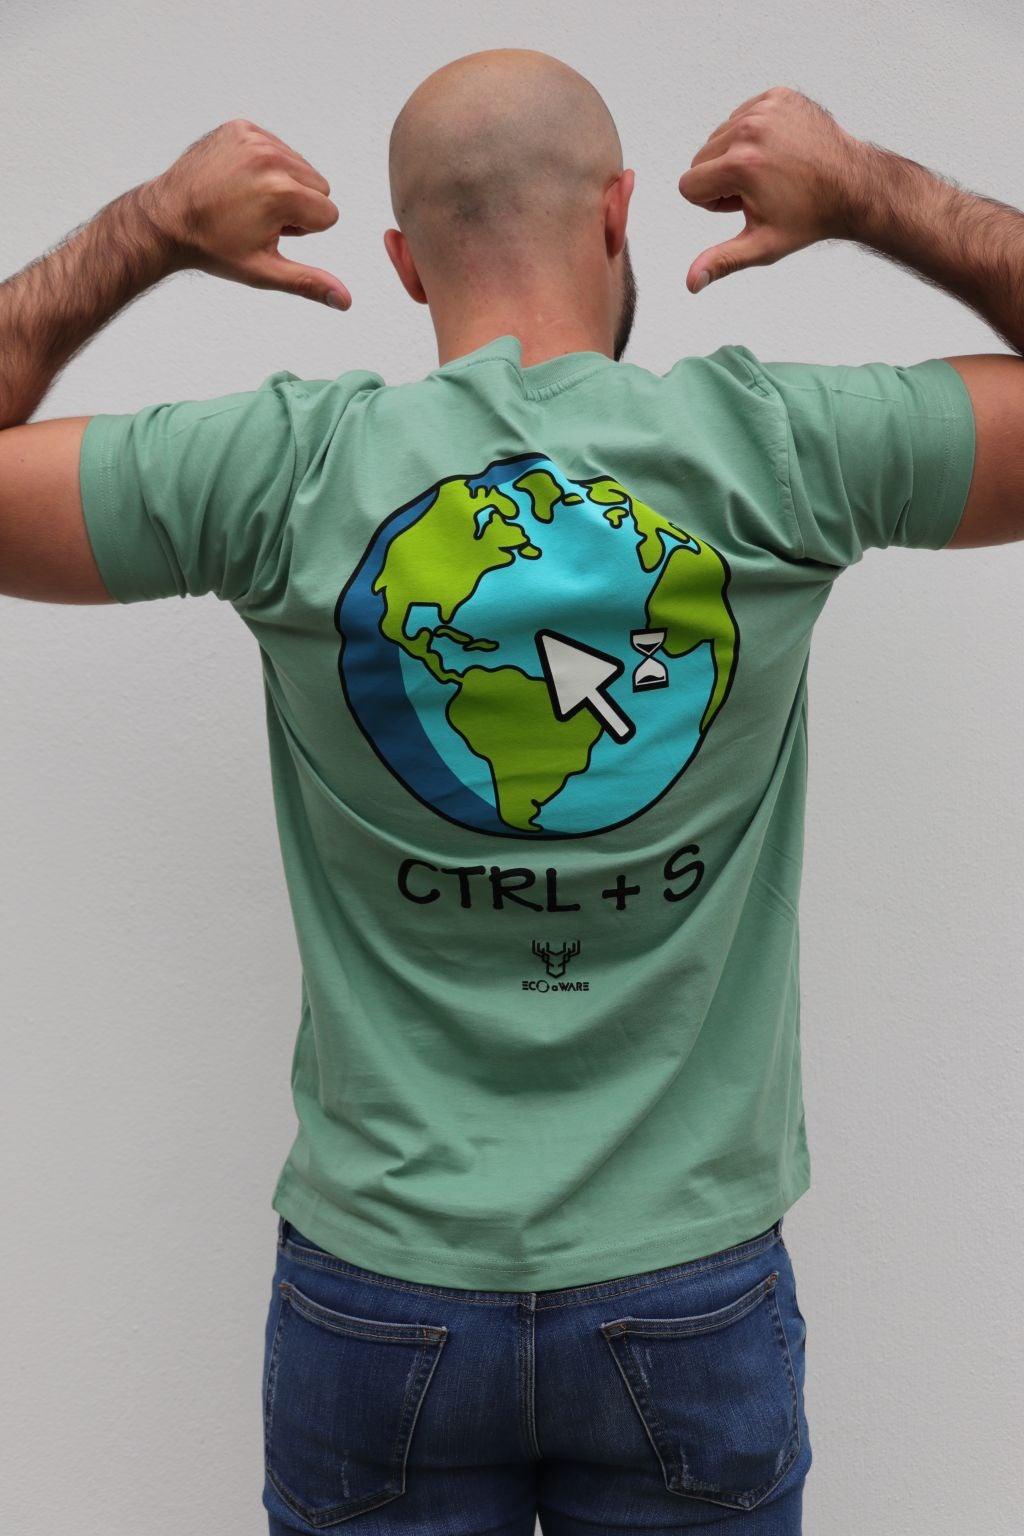 CTRL + Save The Planet t-shirt - ECO aWARE